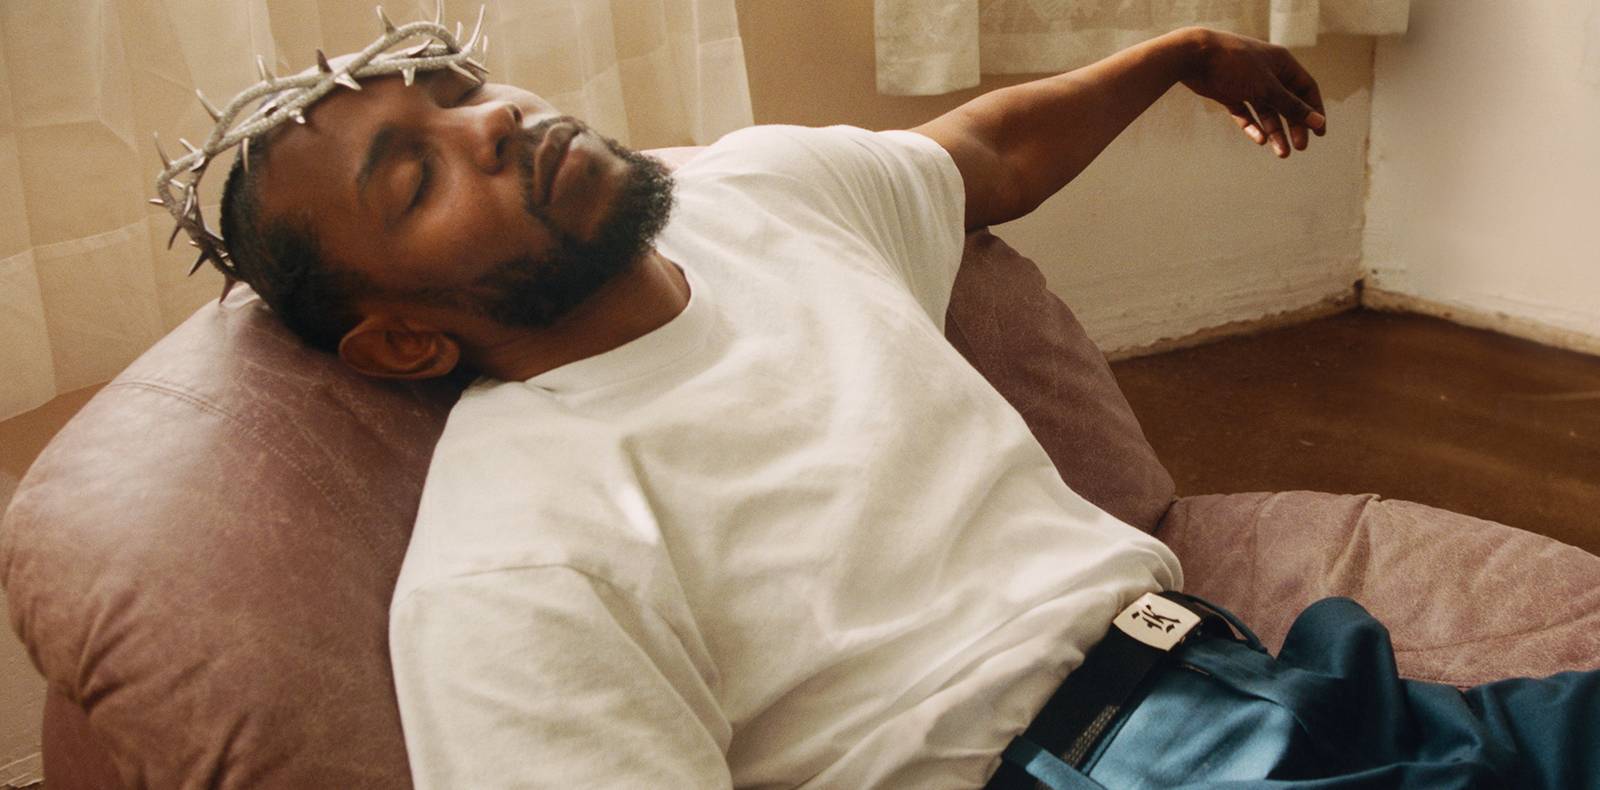 Kendrick Lamar Announces New Album 'Mr. Morale & The Big Steppers